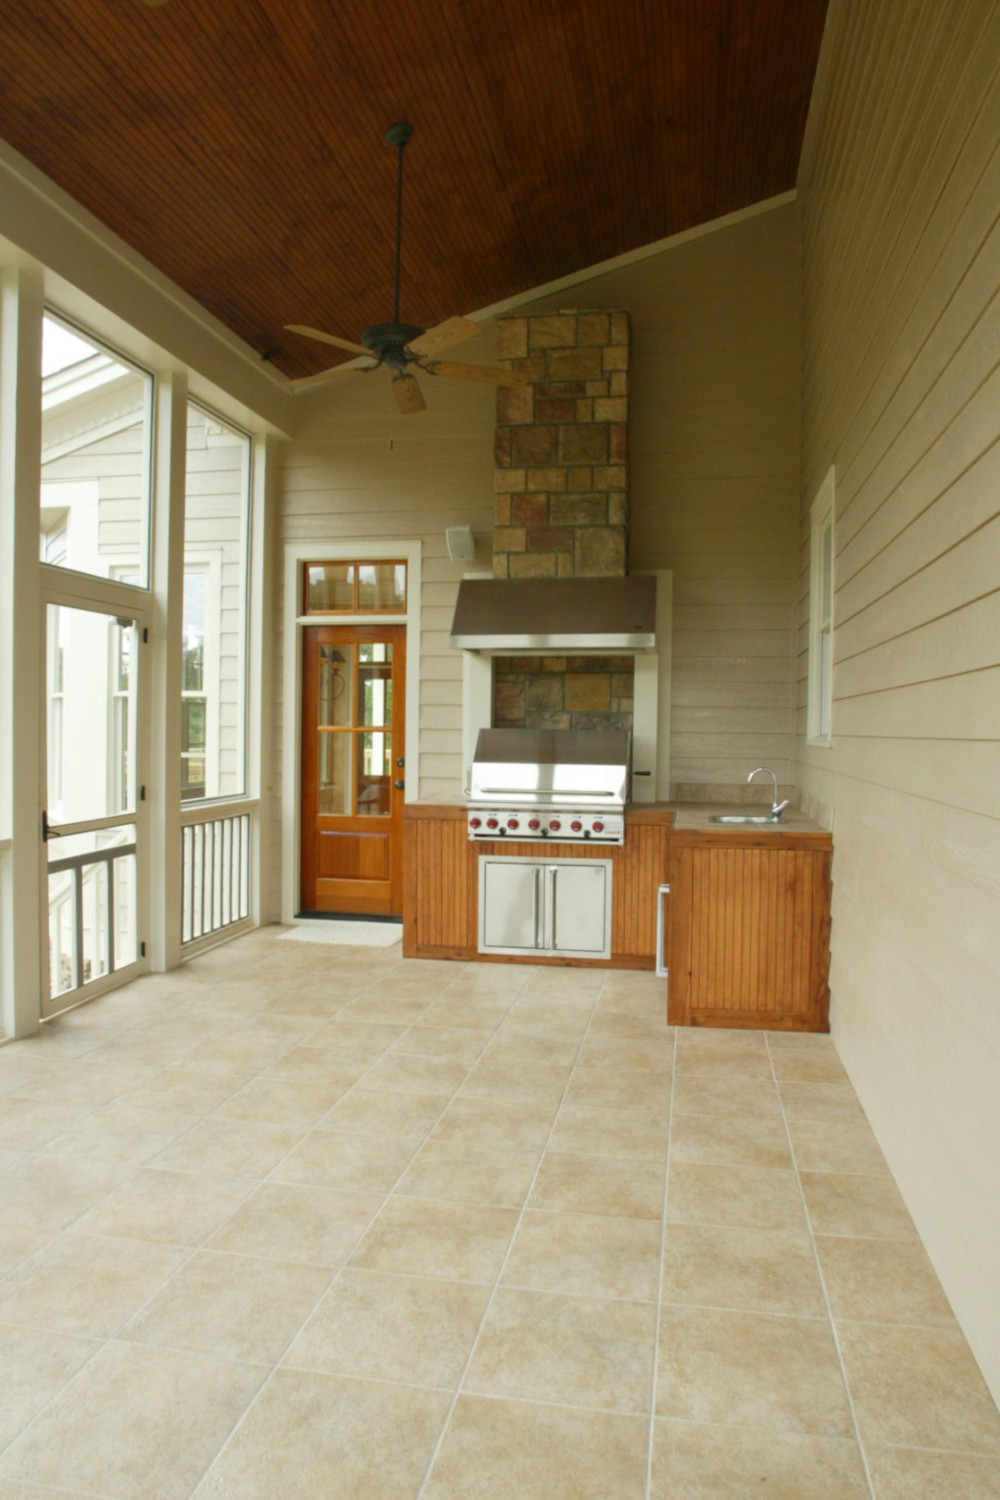 Outdoor kitchen with stone floor